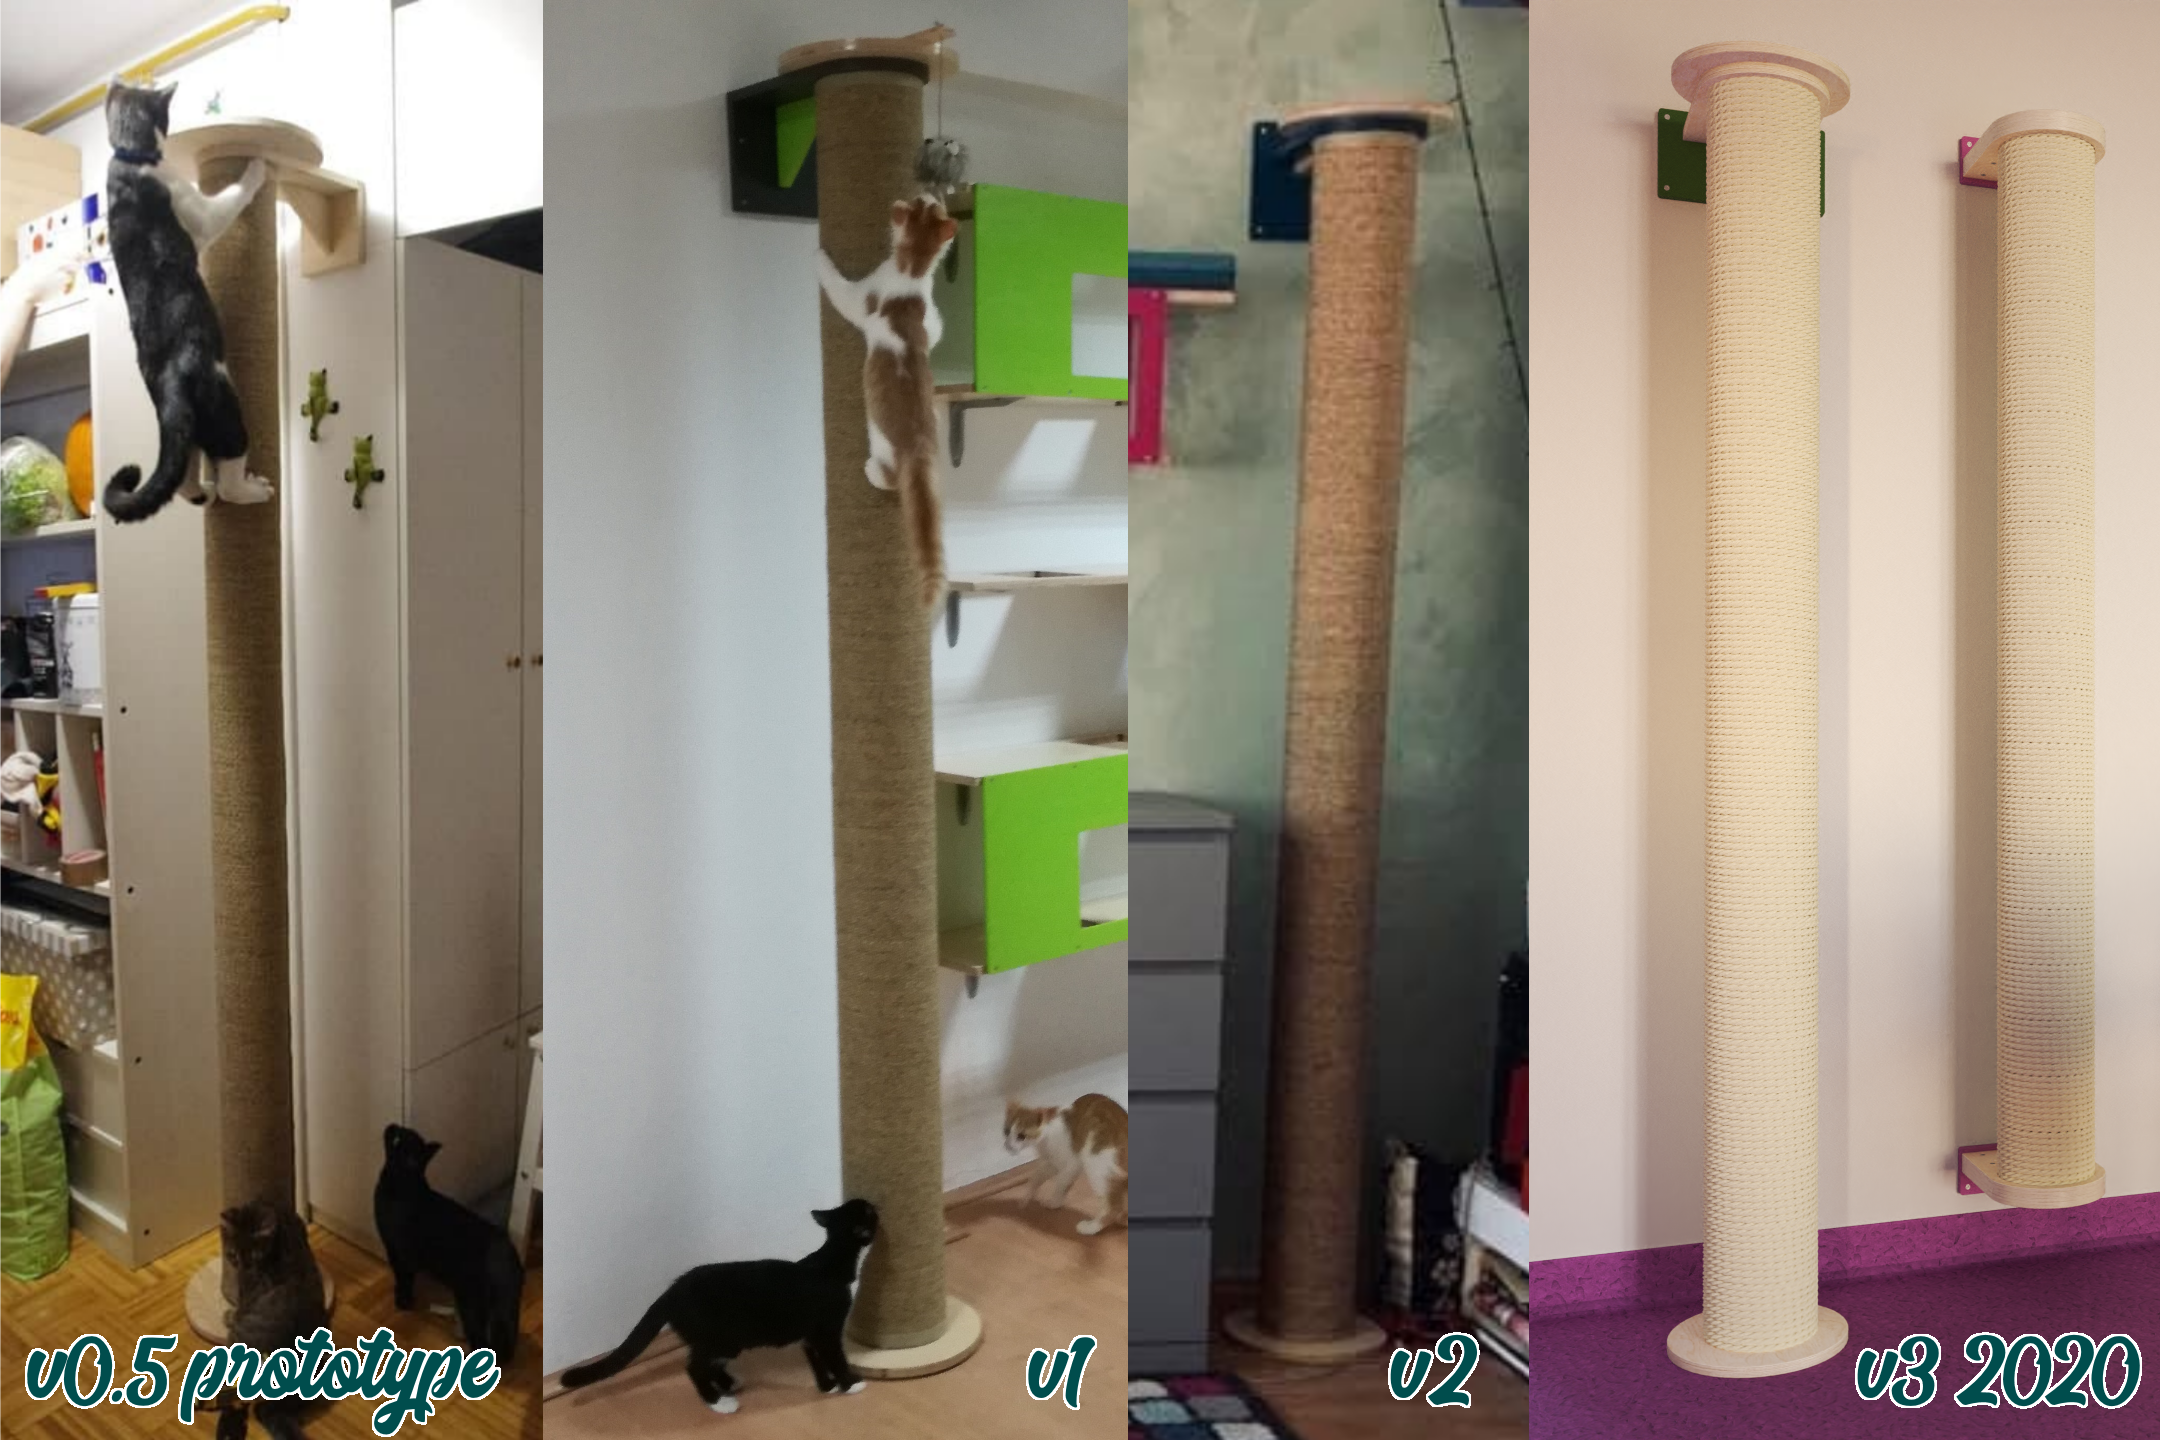 Cat Wall Scratching Pole Post Shelf - Mounty Chonk - Scratchy Things Premium Pet Furniture